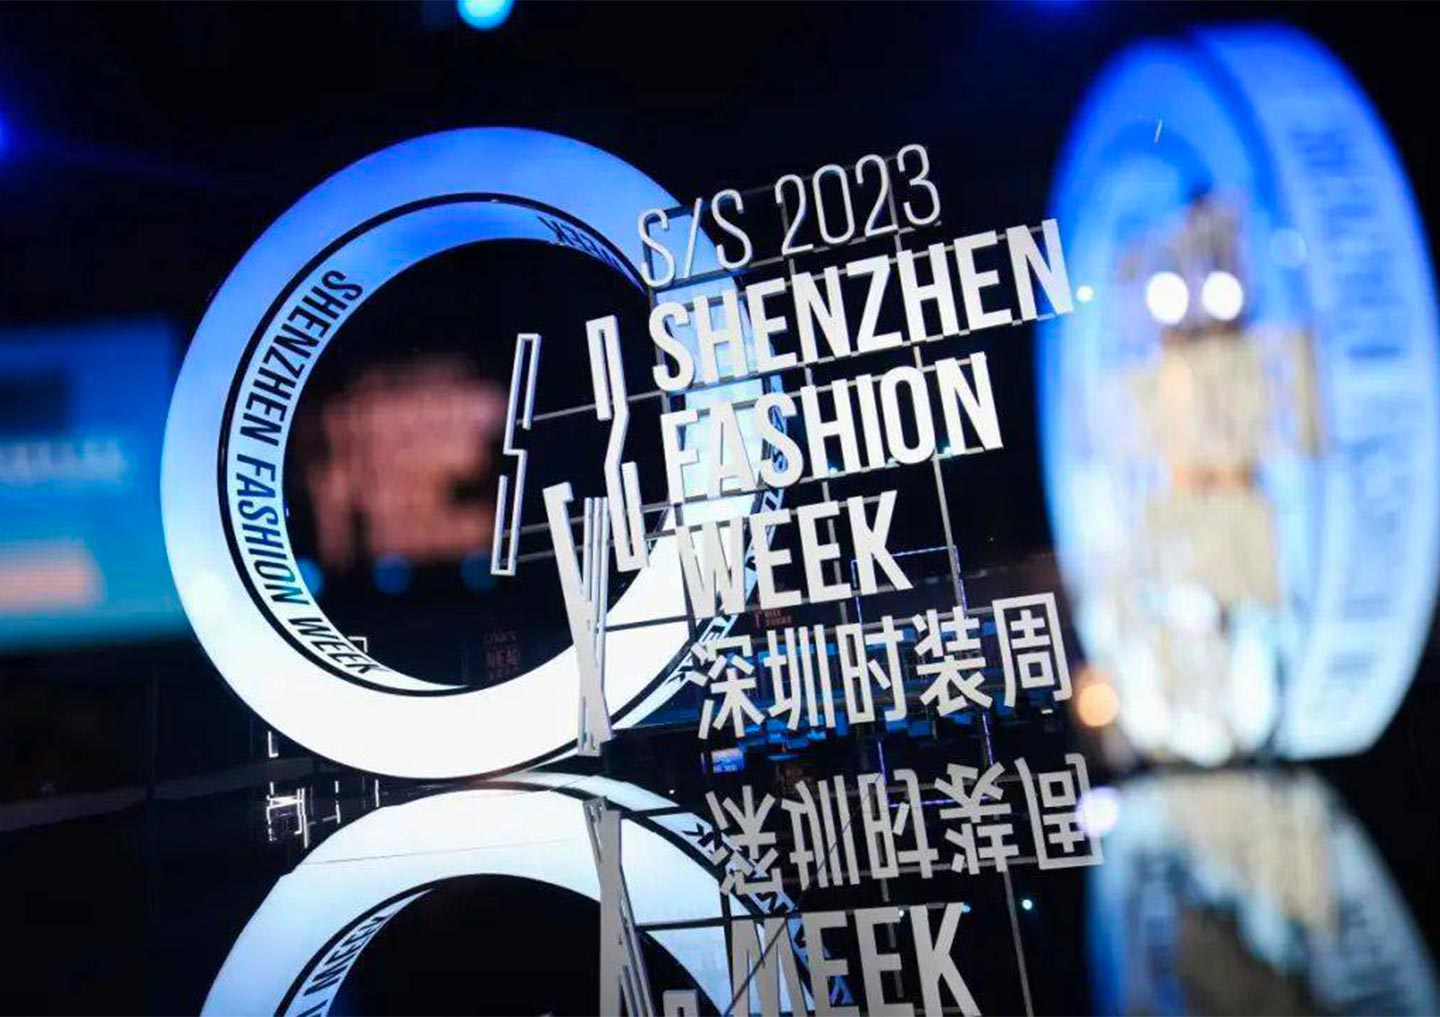 Shenzhen Fashion Week